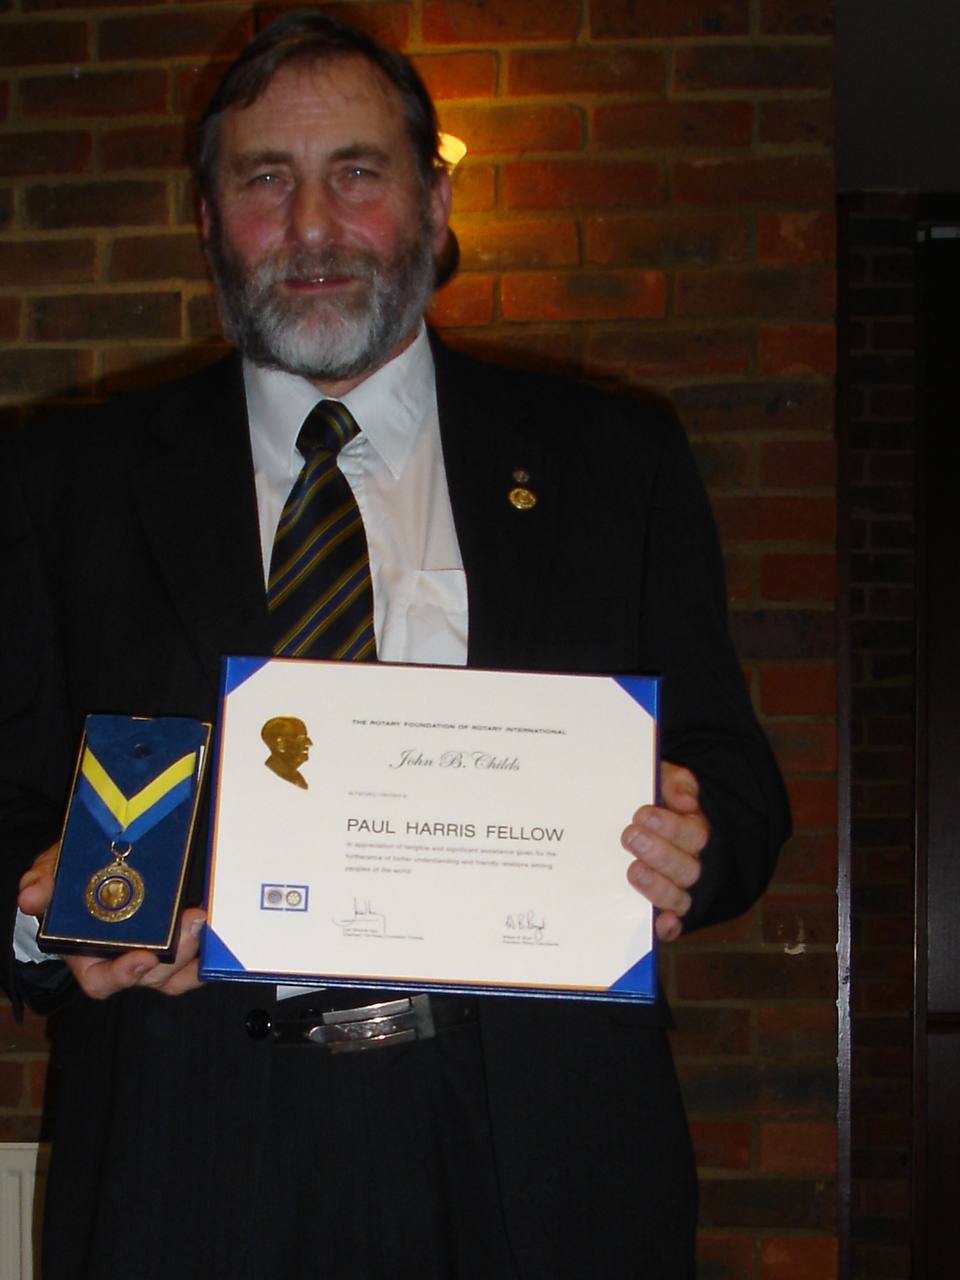 For he's a jolly good fellow - John proudly holding his Paul Harris Fellowship certificate